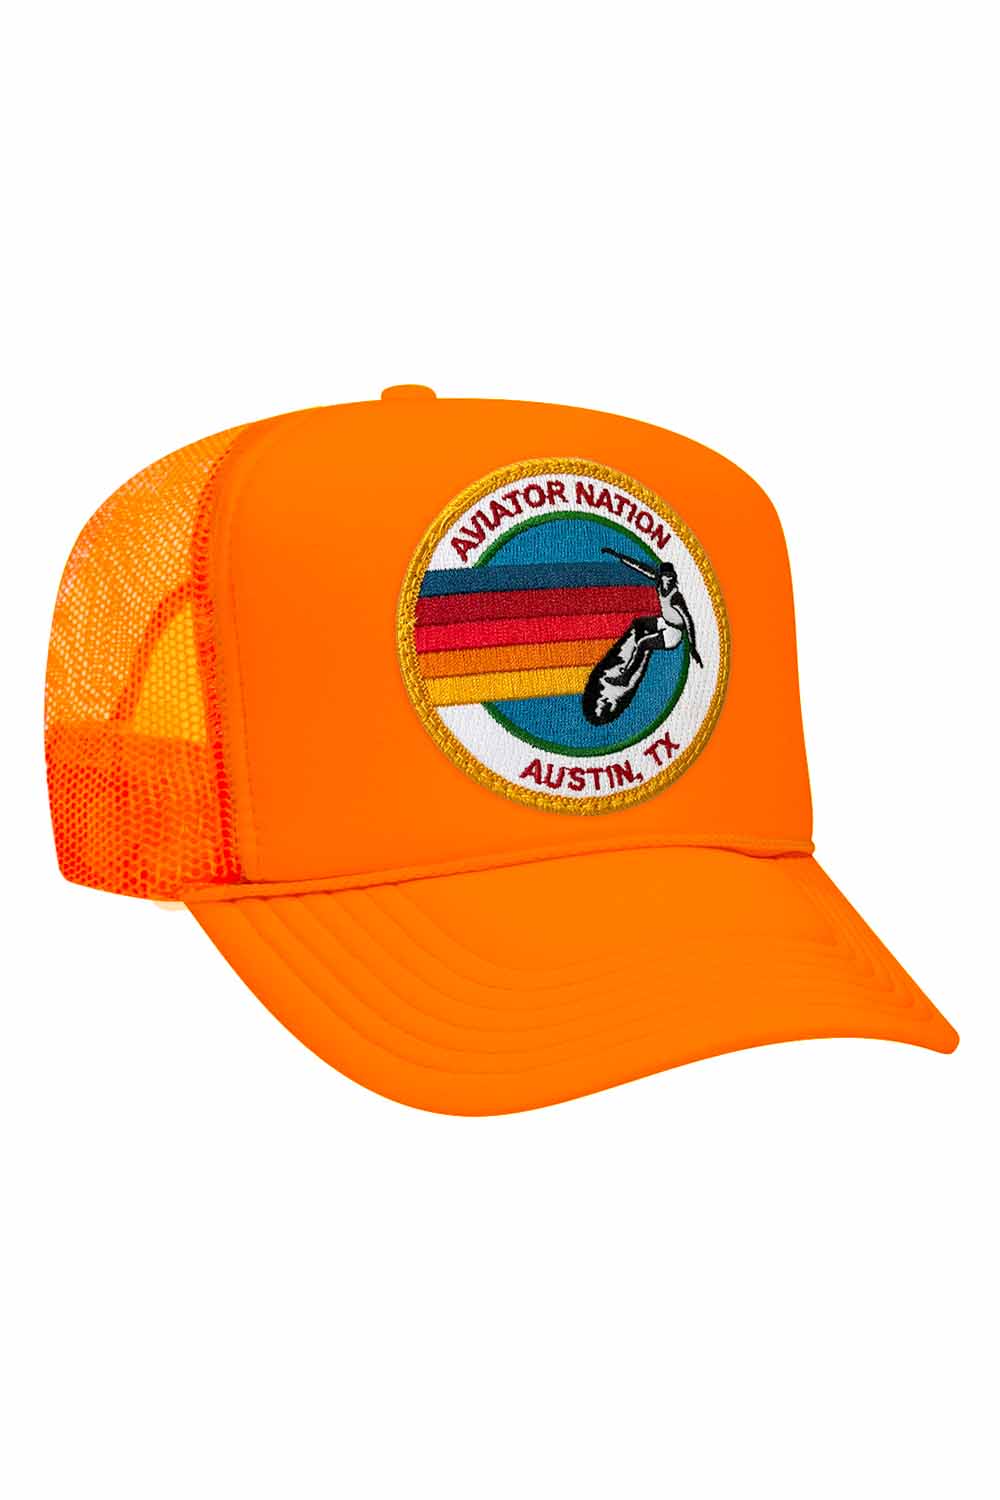 SIGNATURE AUSTIN TRUCKER HAT HATS Aviator Nation NEON ORANGE 